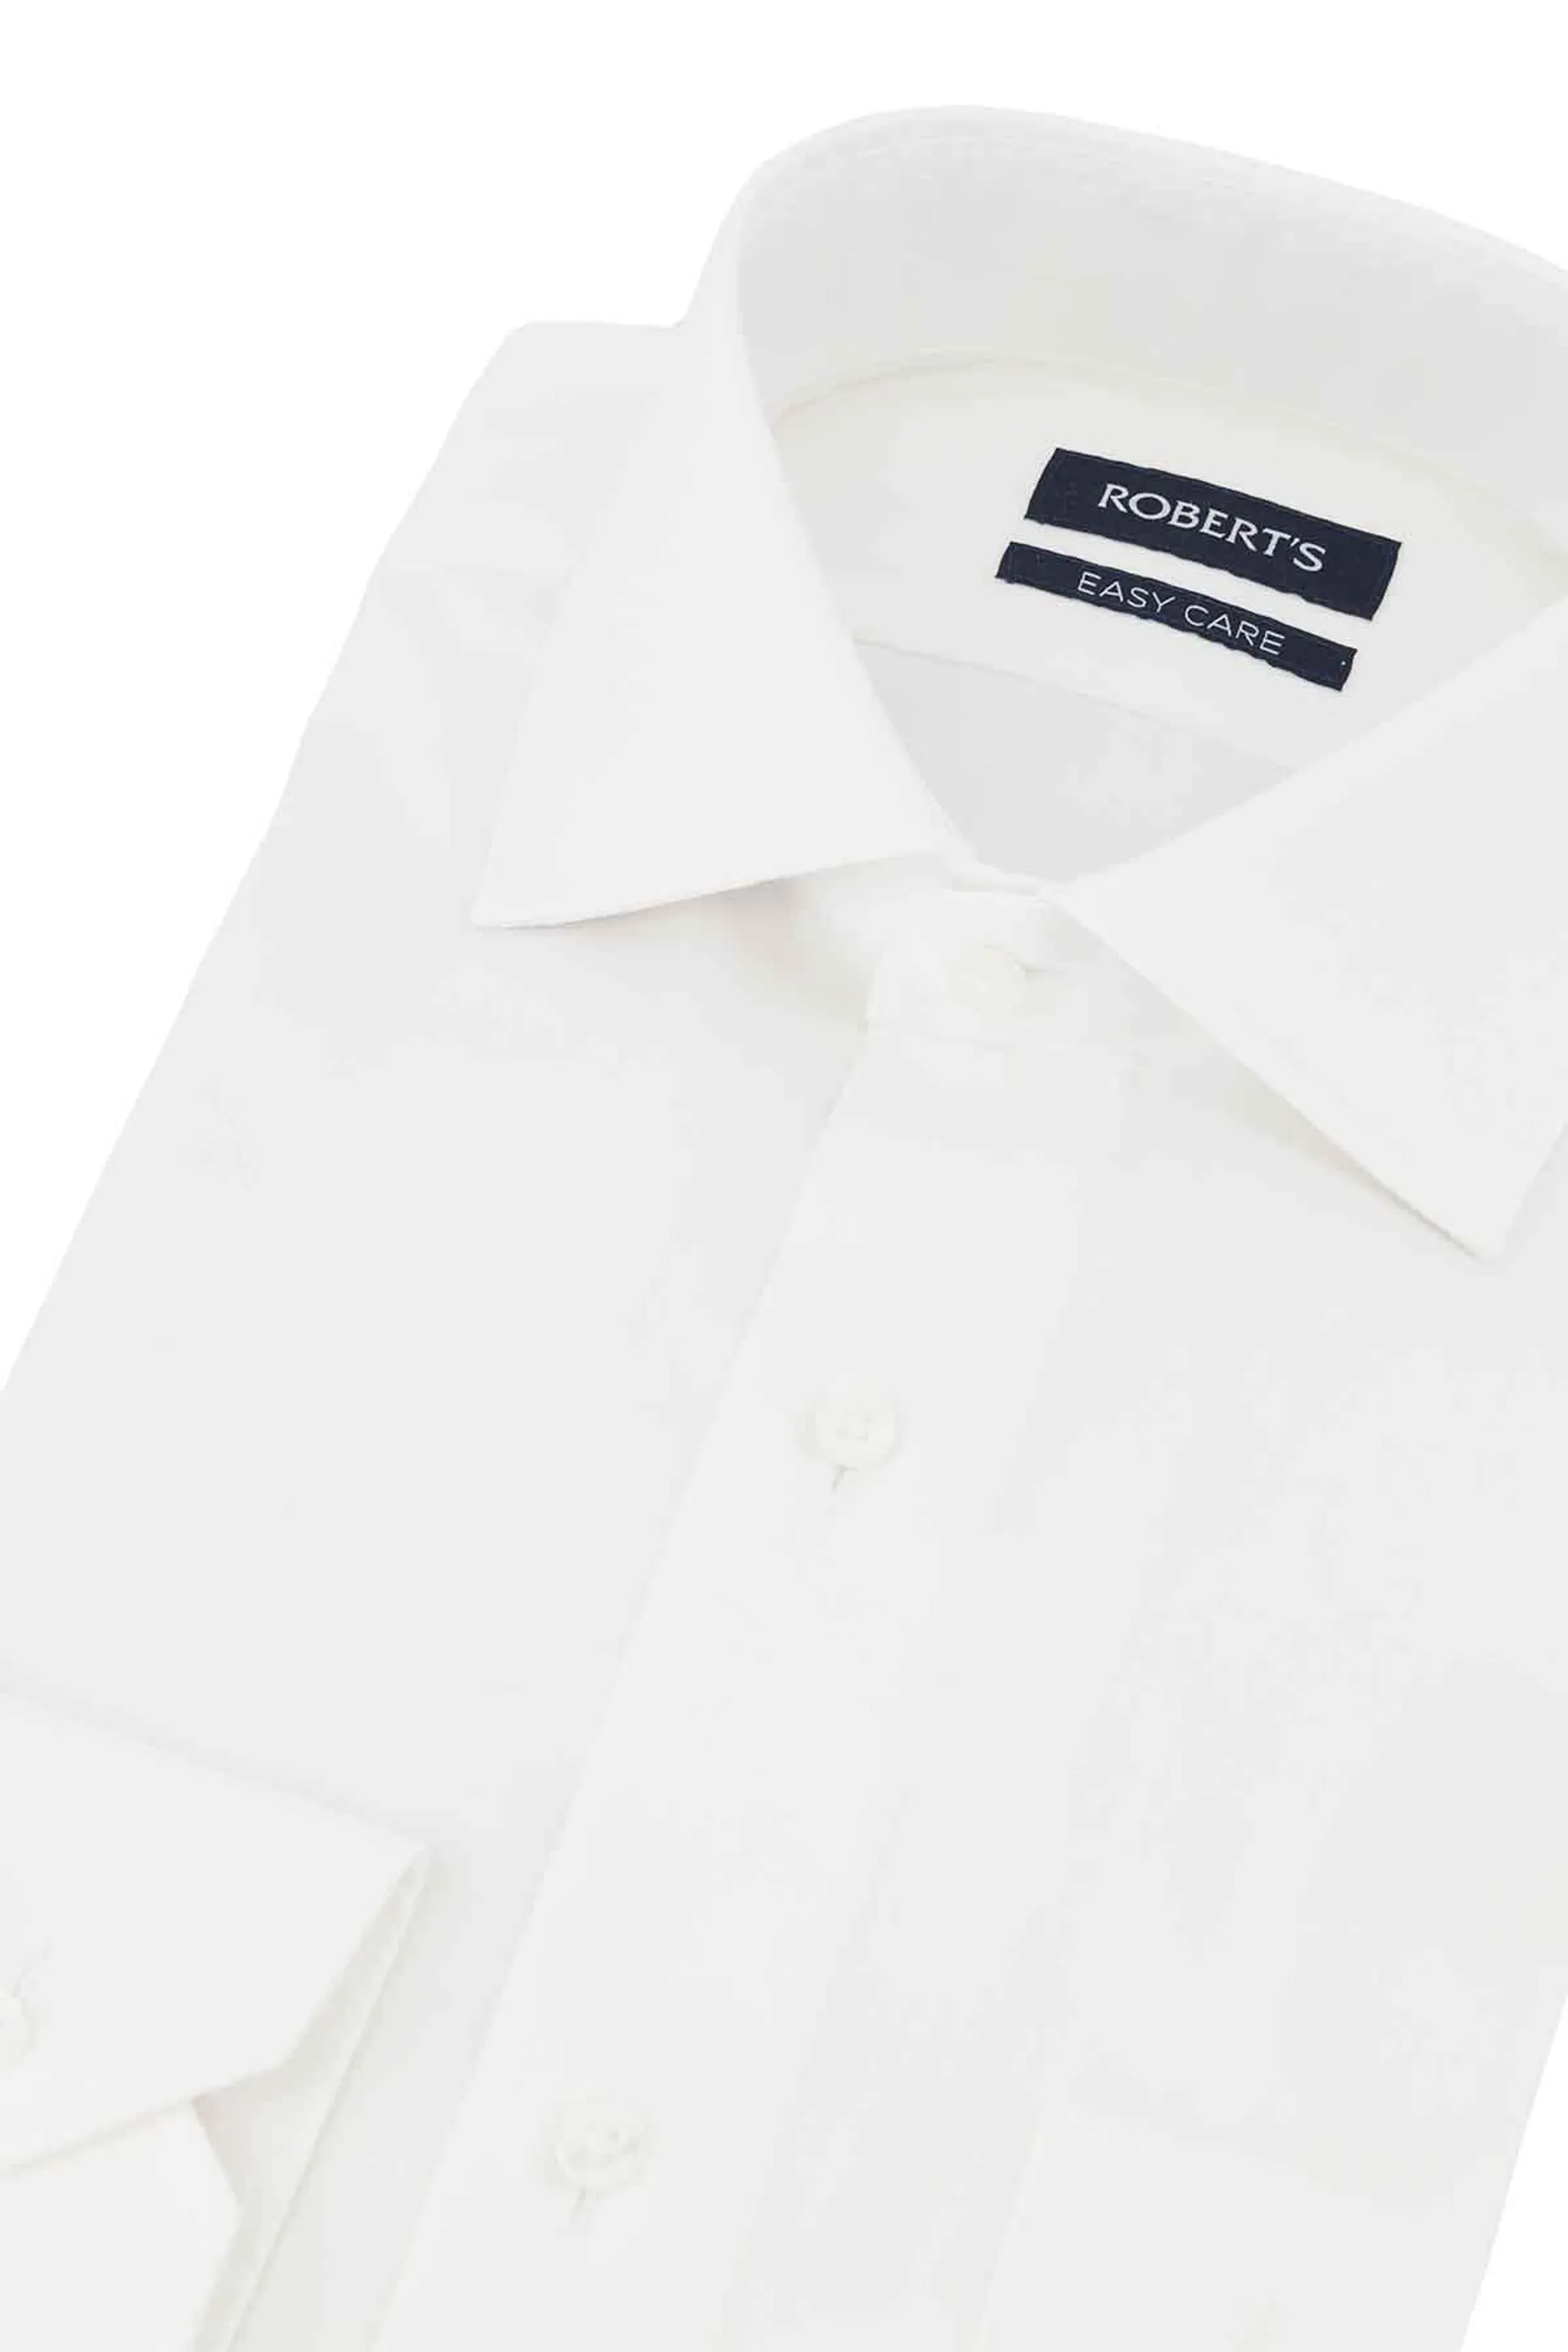 Camisa Roberts Easy Care Regular fit Color blanco